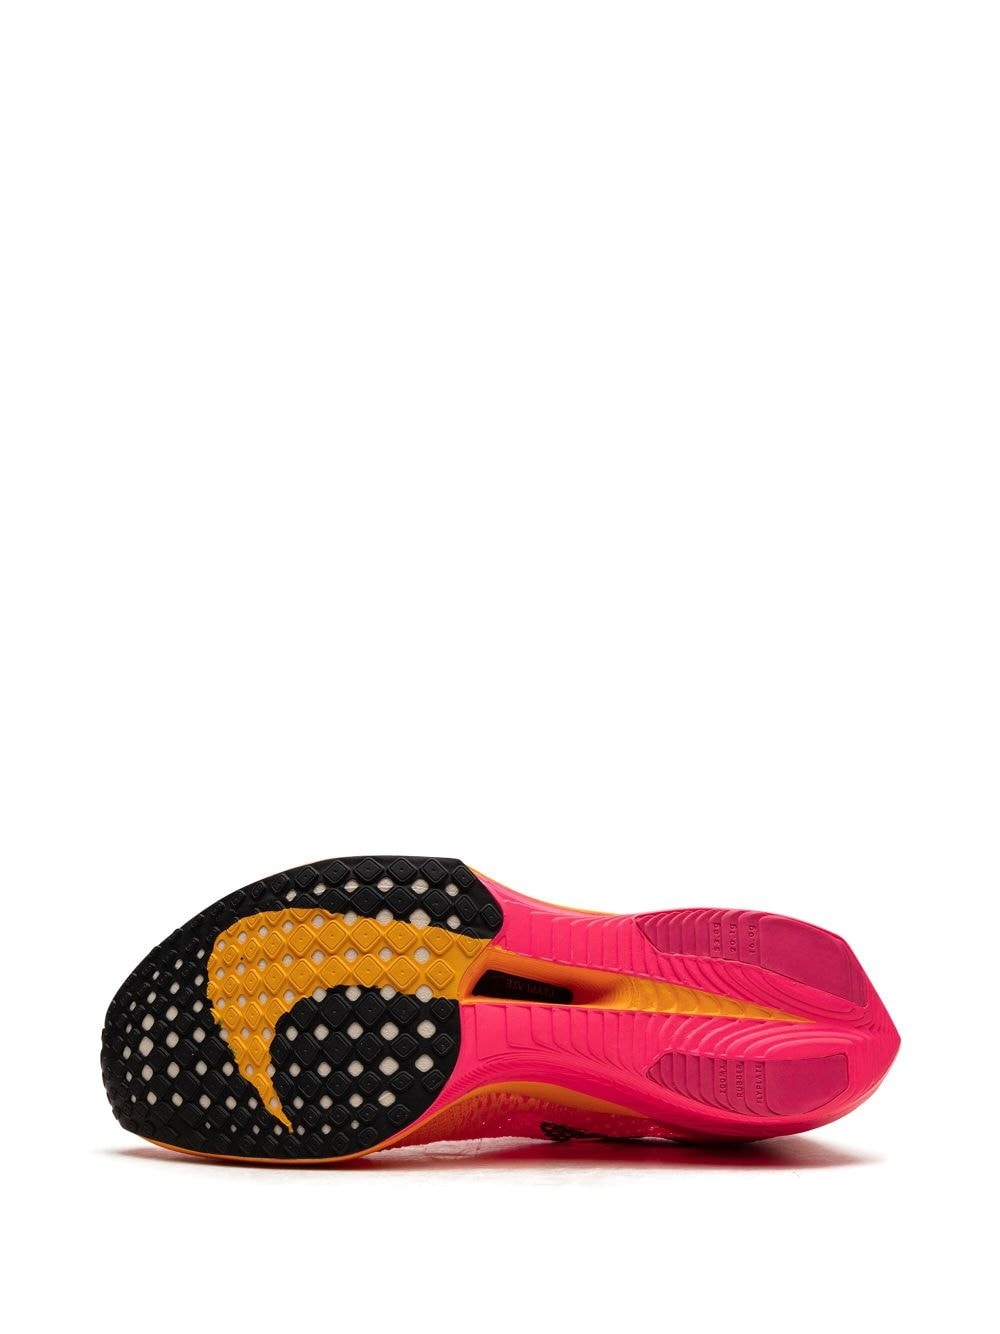 ZoomX Vaporfly Next% 3 "Hyper Pink/Laser Orange" sneakers - 4